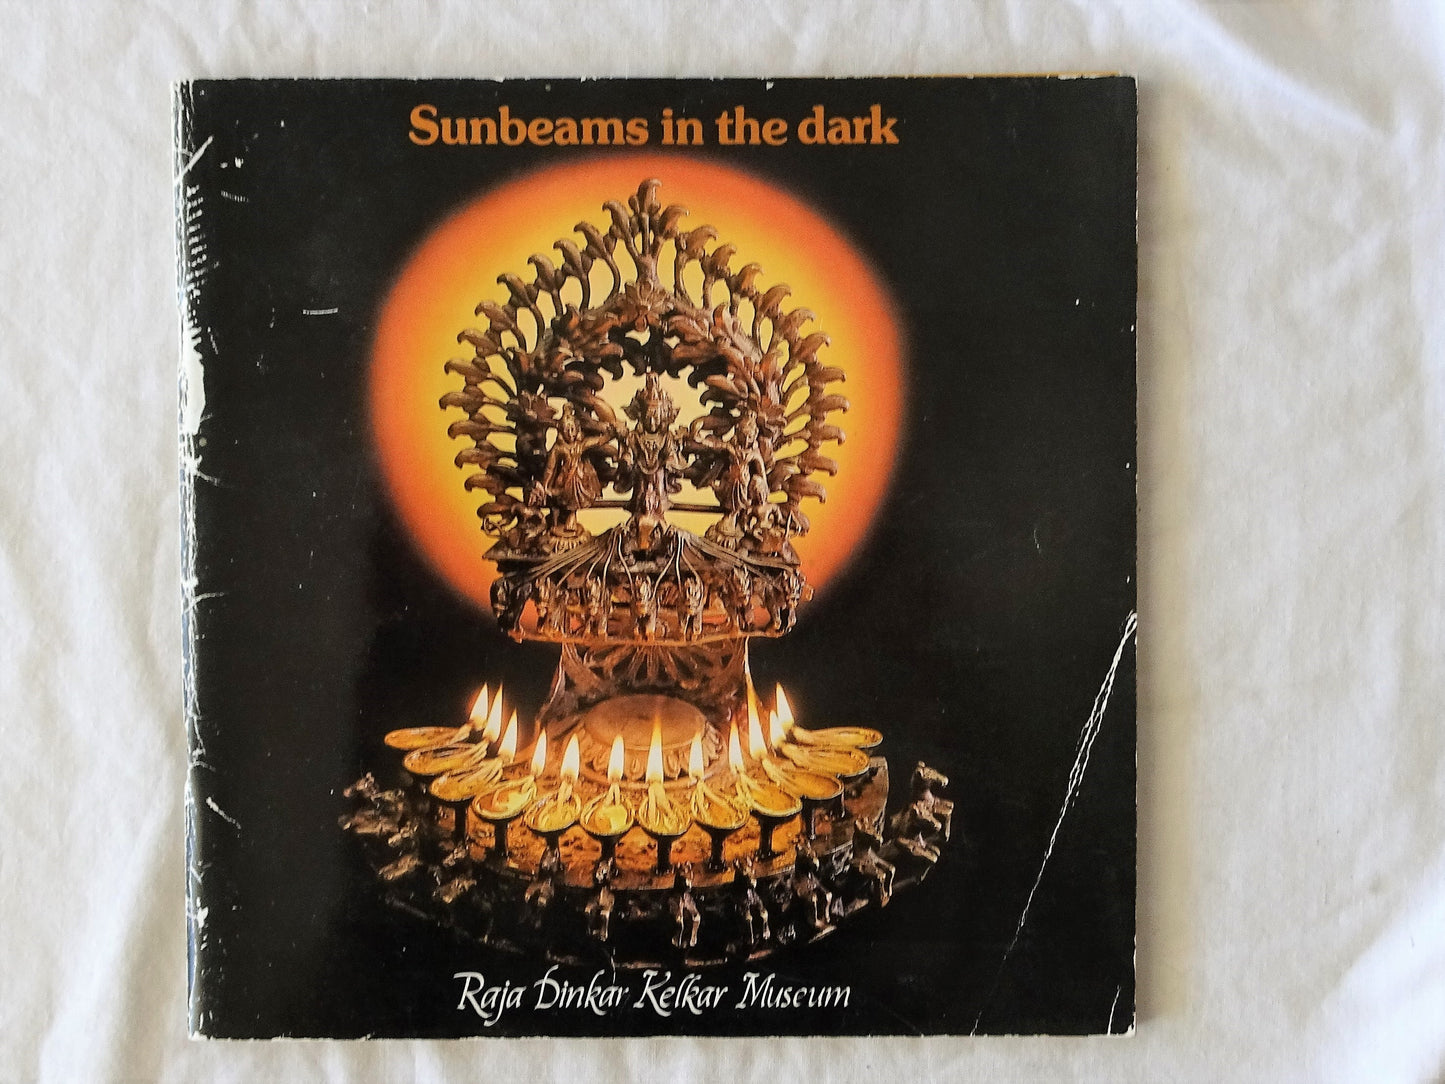 Sunbeams in the Dark by Raja Dinkar Kelkar Museum